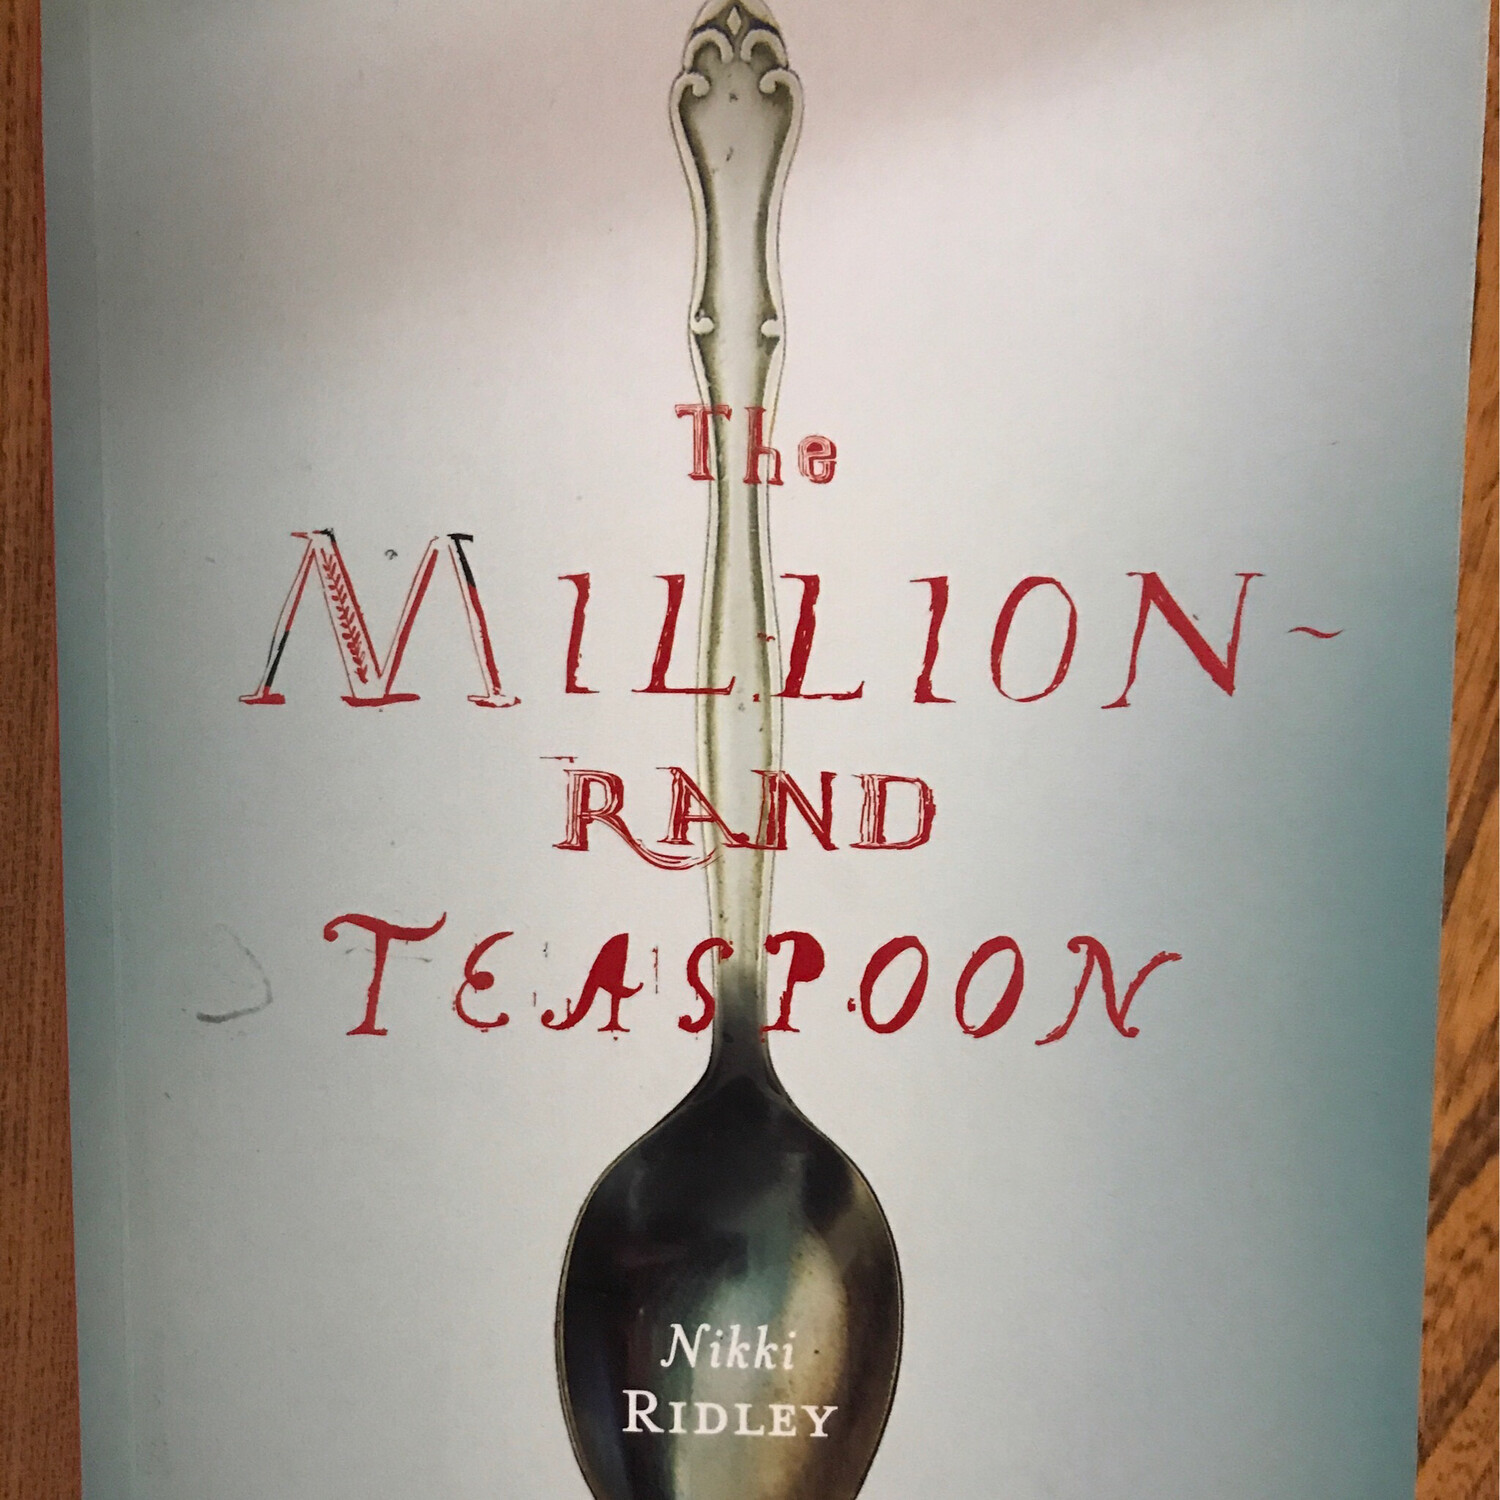 The Million Rand Teaspoon